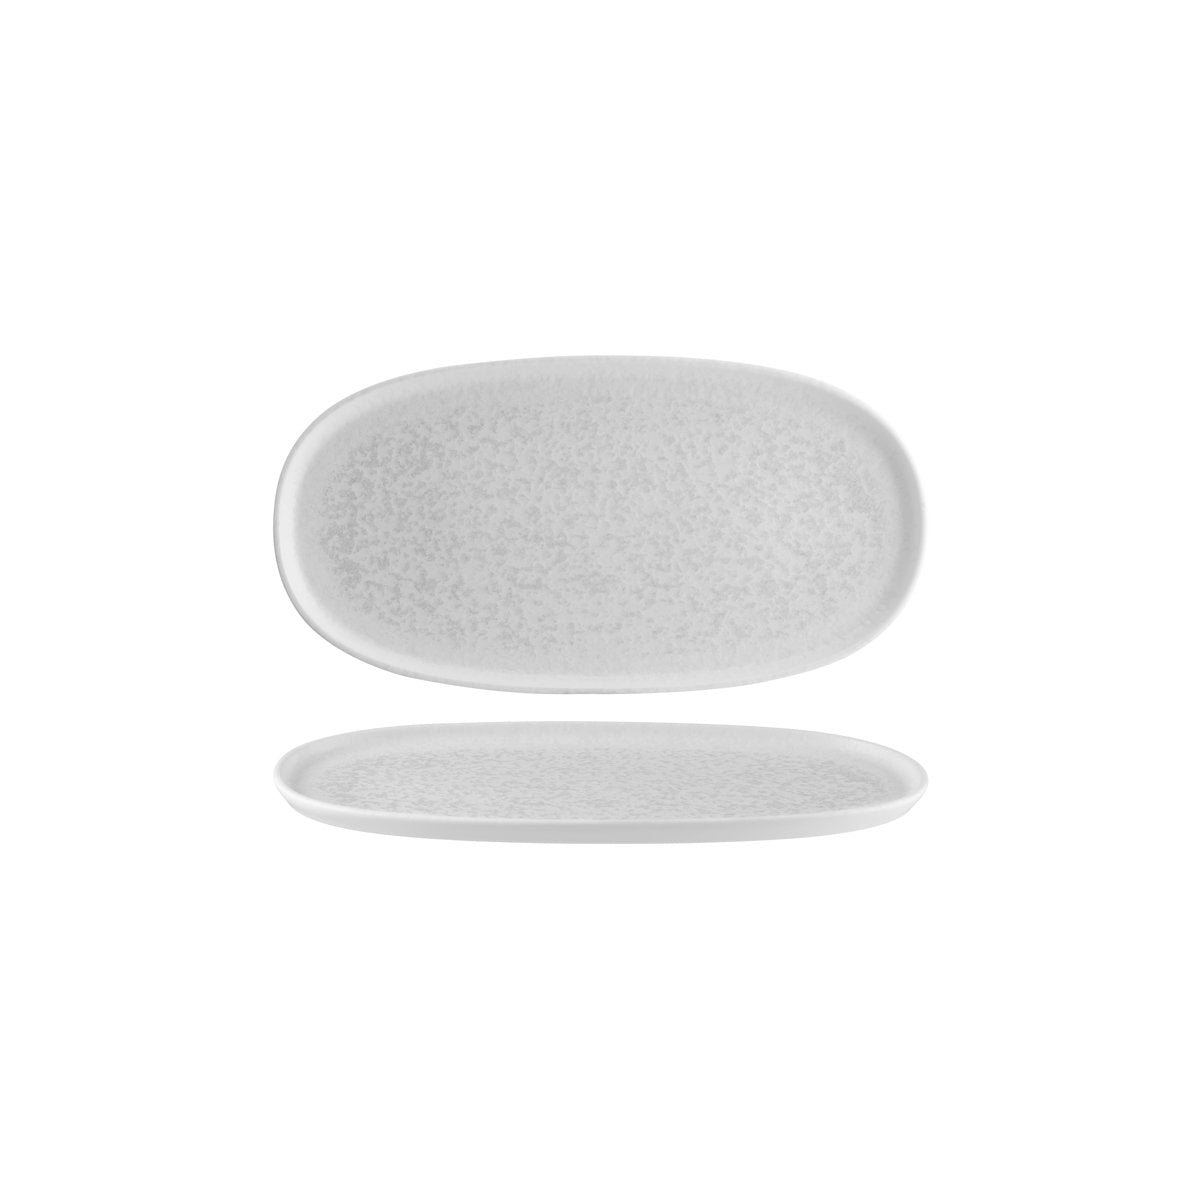 130222 Bonna Lunar White Oval Platter 300x155x15mm Tomkin Australia Hospitality Supplies